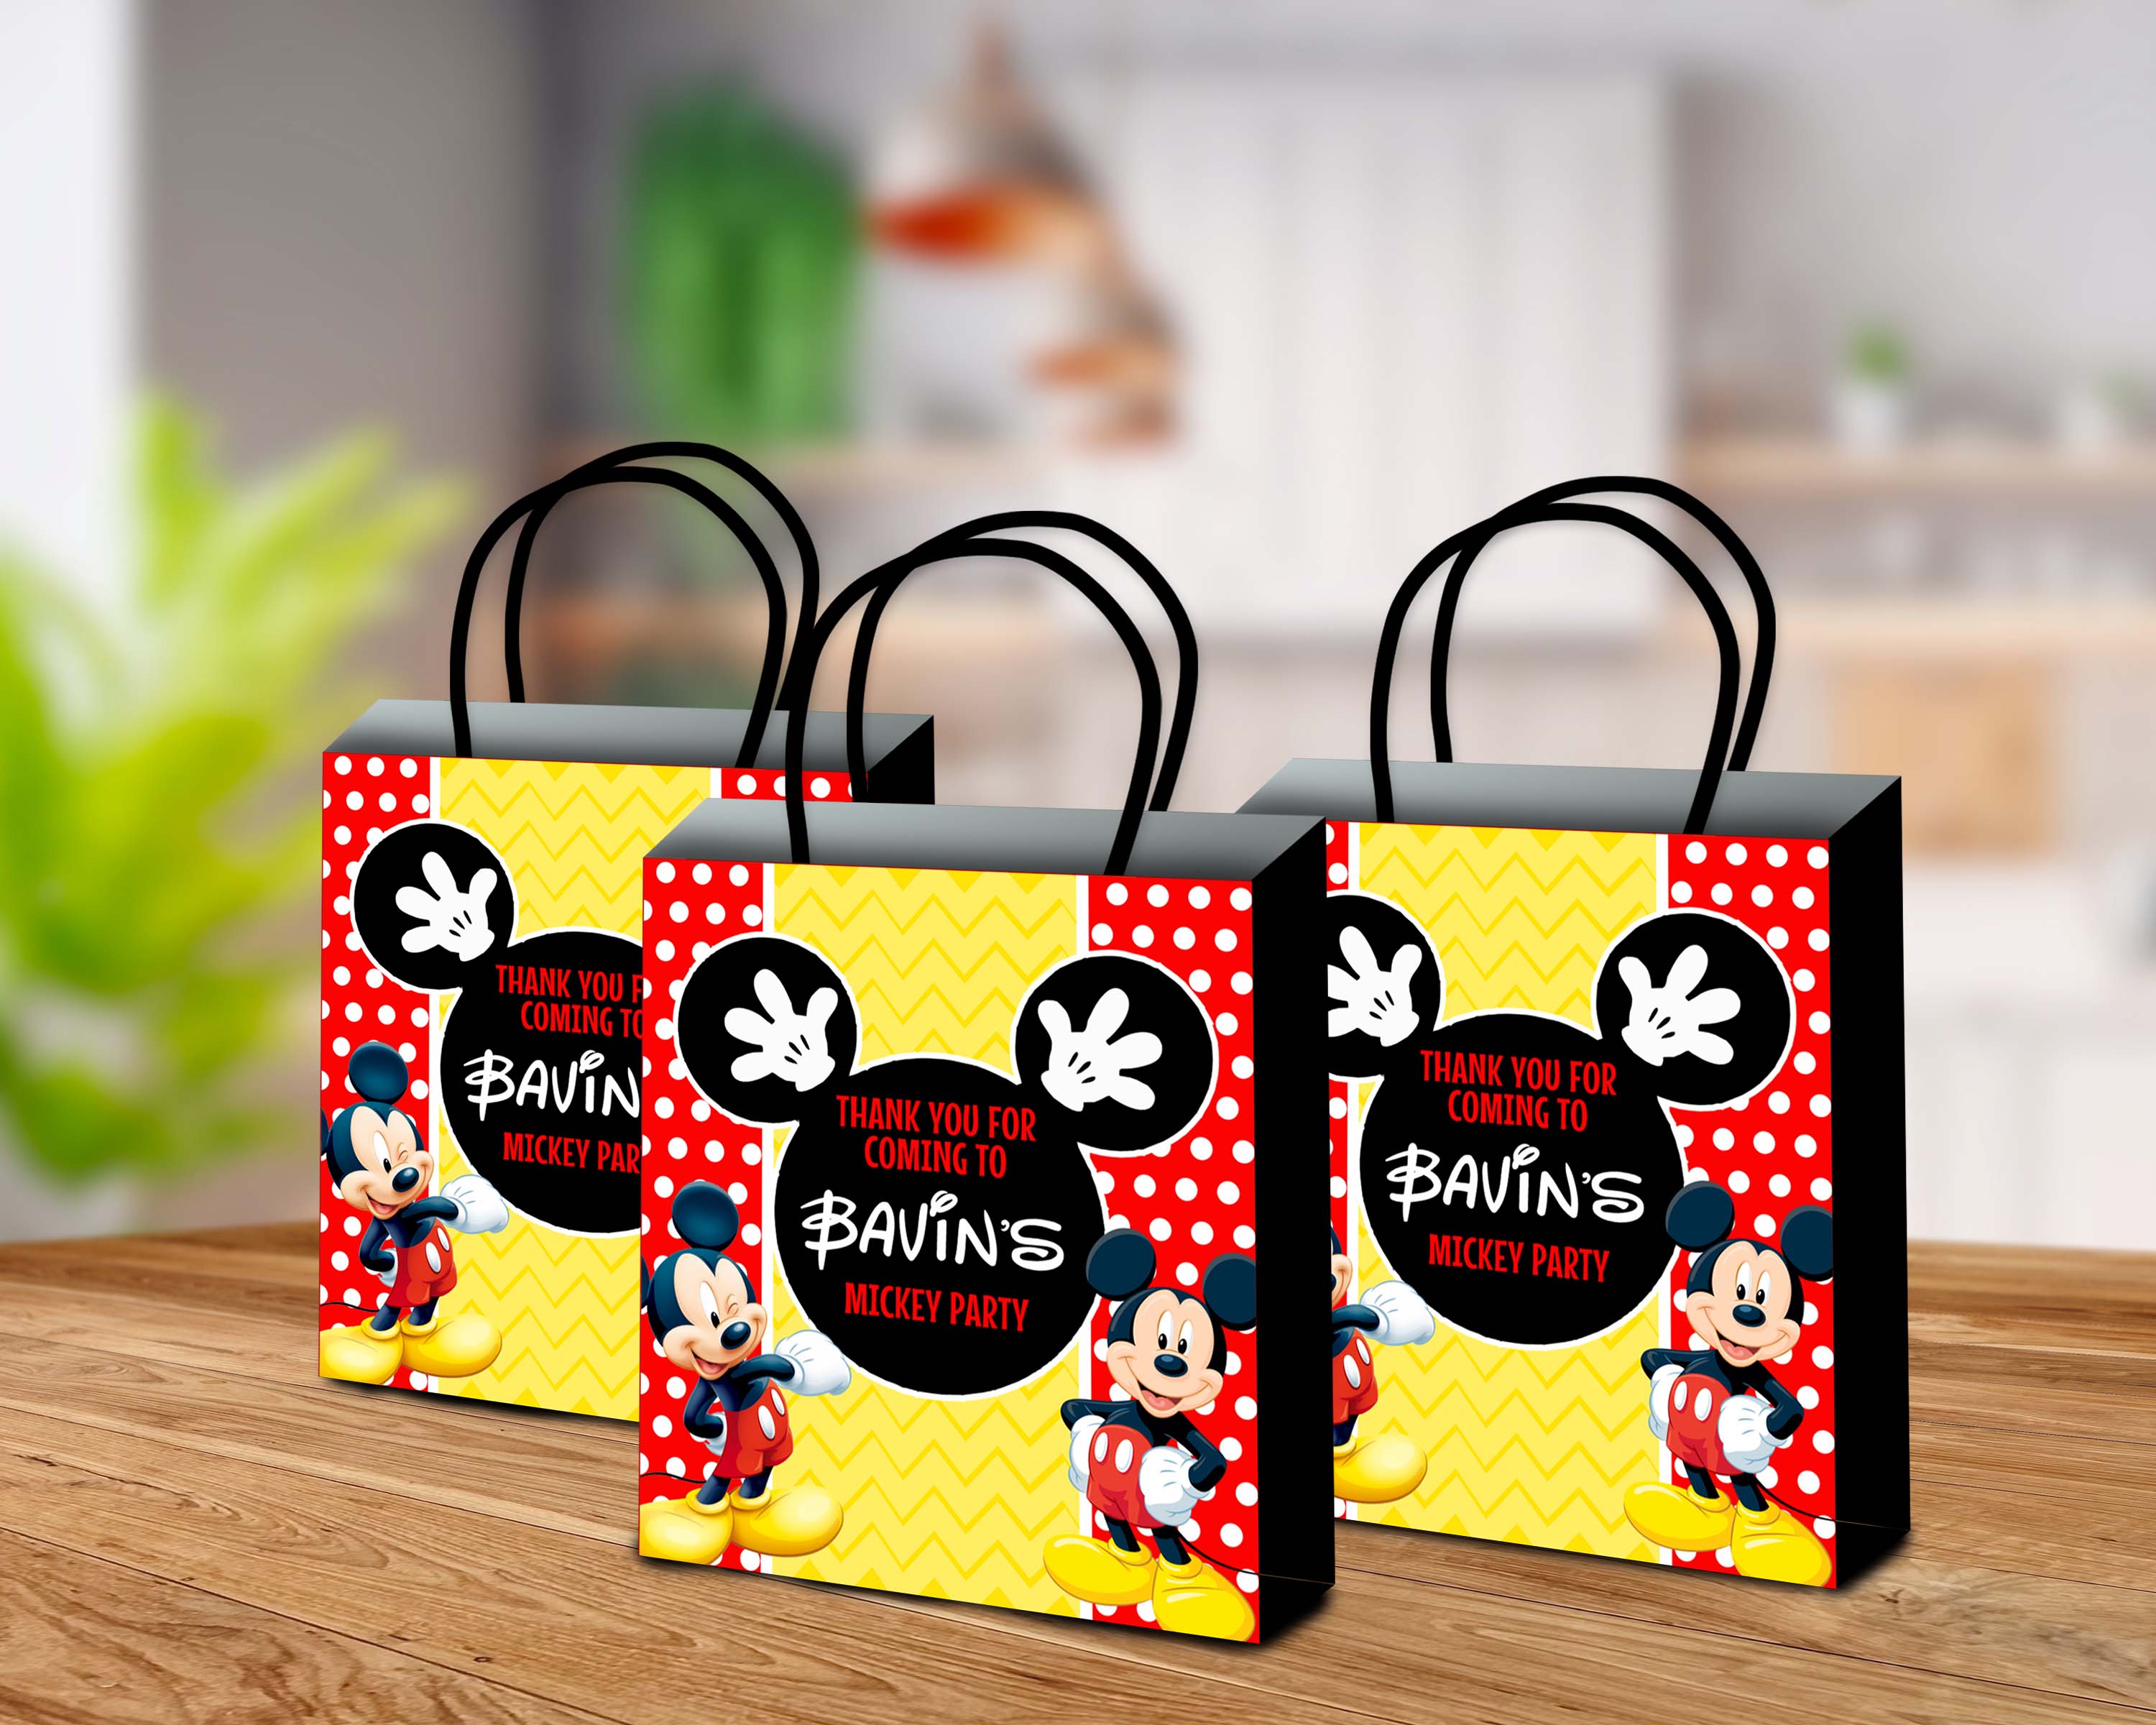 Mickey Mouse Mug: Gift/Send Addons Gifts Online JVS1185181 |IGP.com